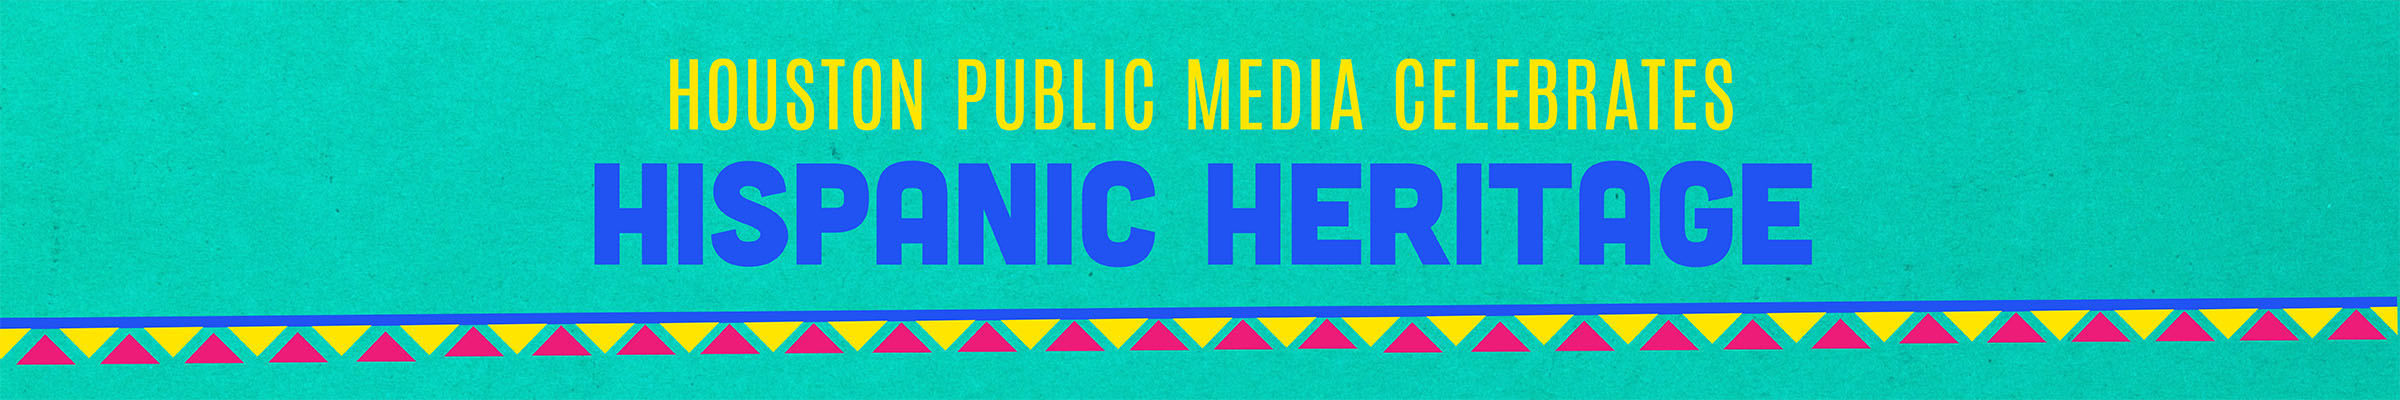 Hispanic Heritage Month page banner